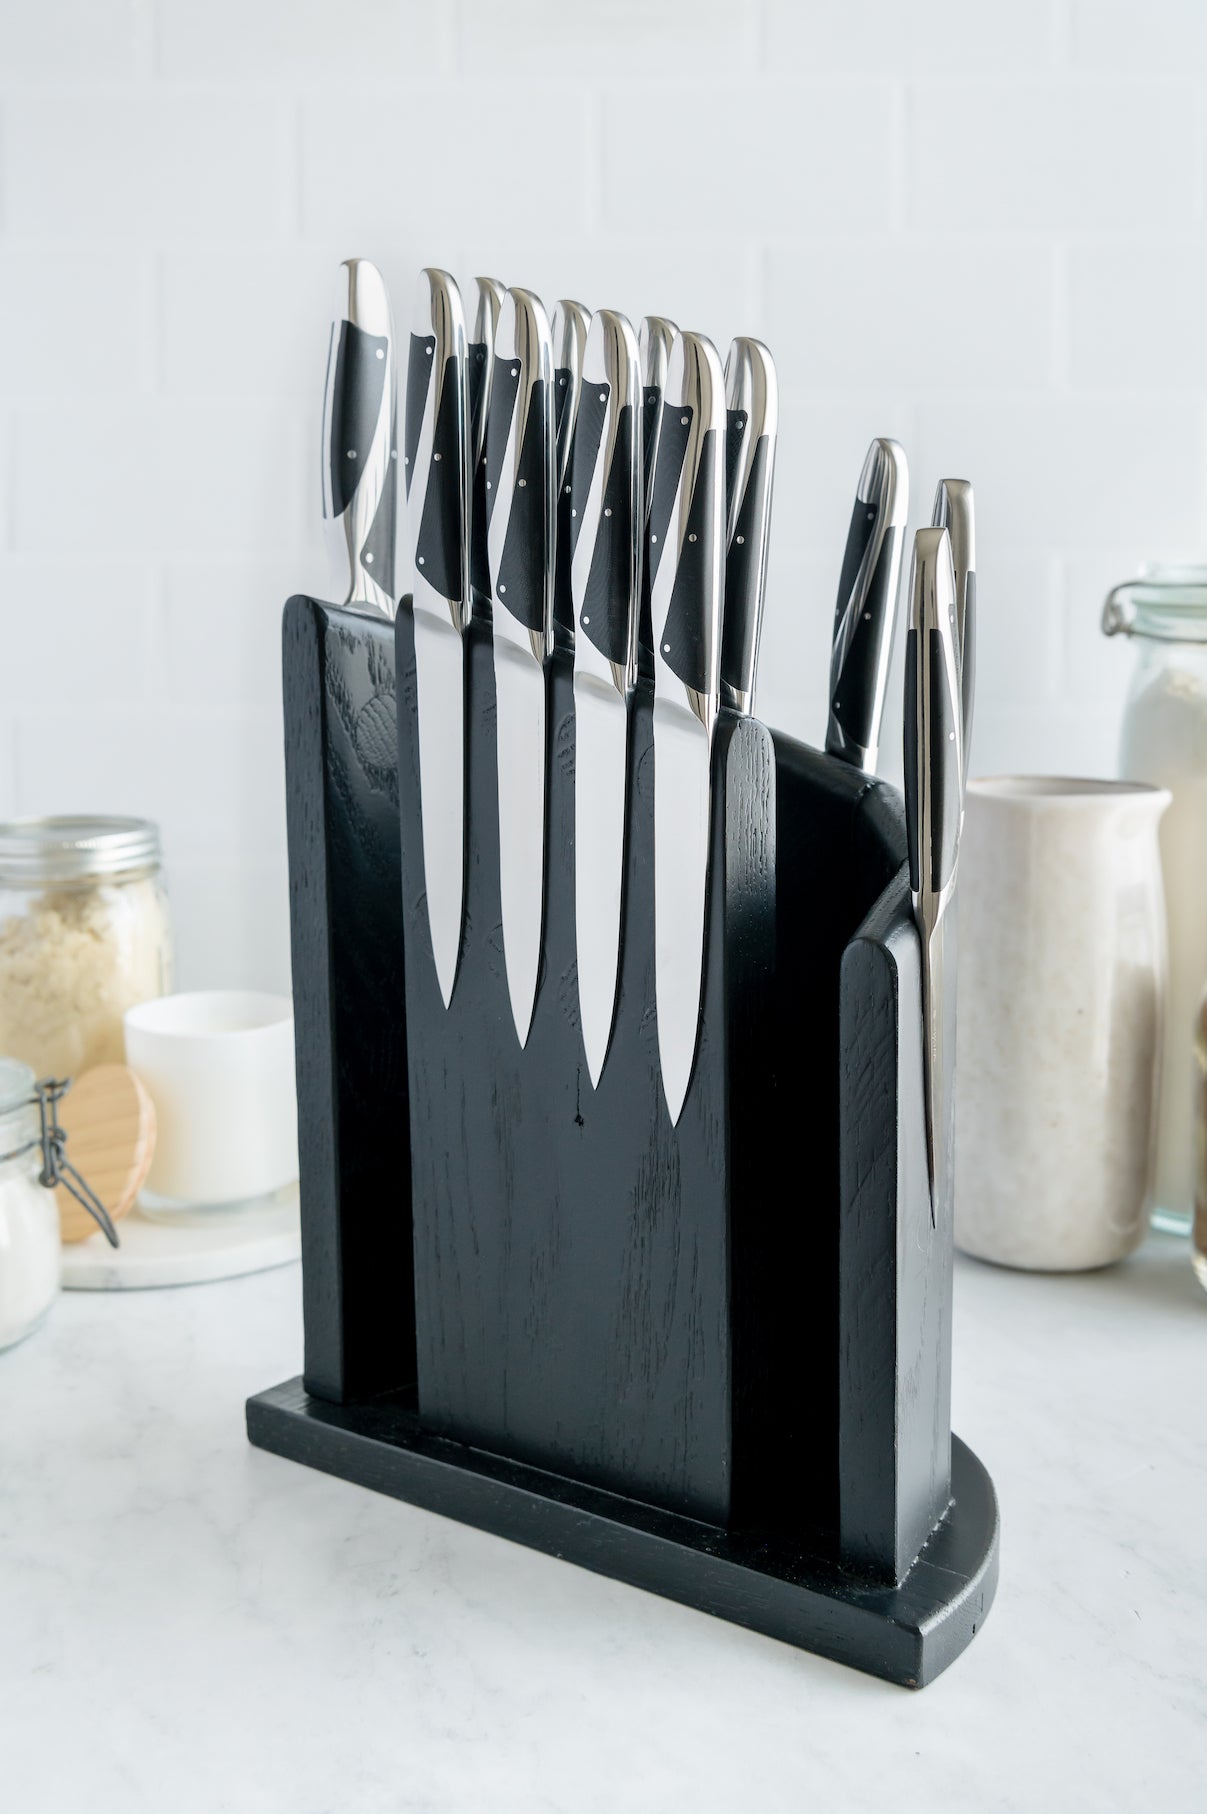 Emerilware Kitchen Knives & Cutlery Accessories